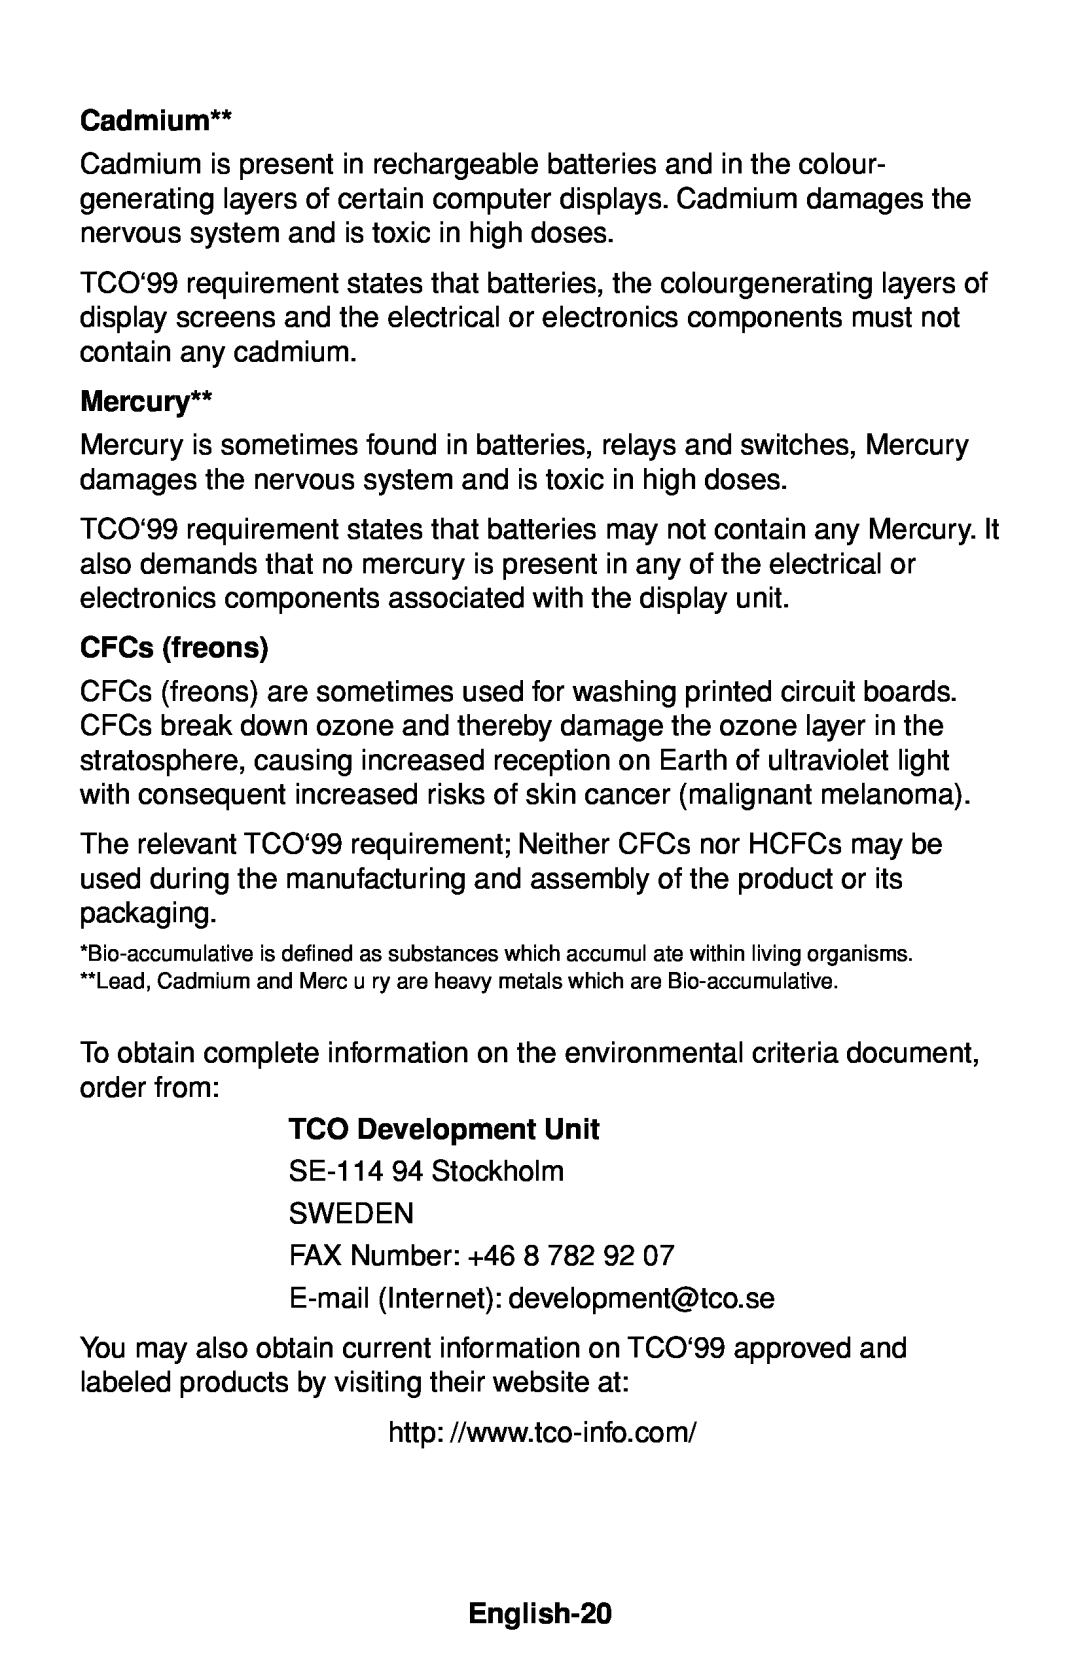 NEC 60000531 user manual Cadmium, Mercury, CFCs freons, TCO Development Unit, English-20 